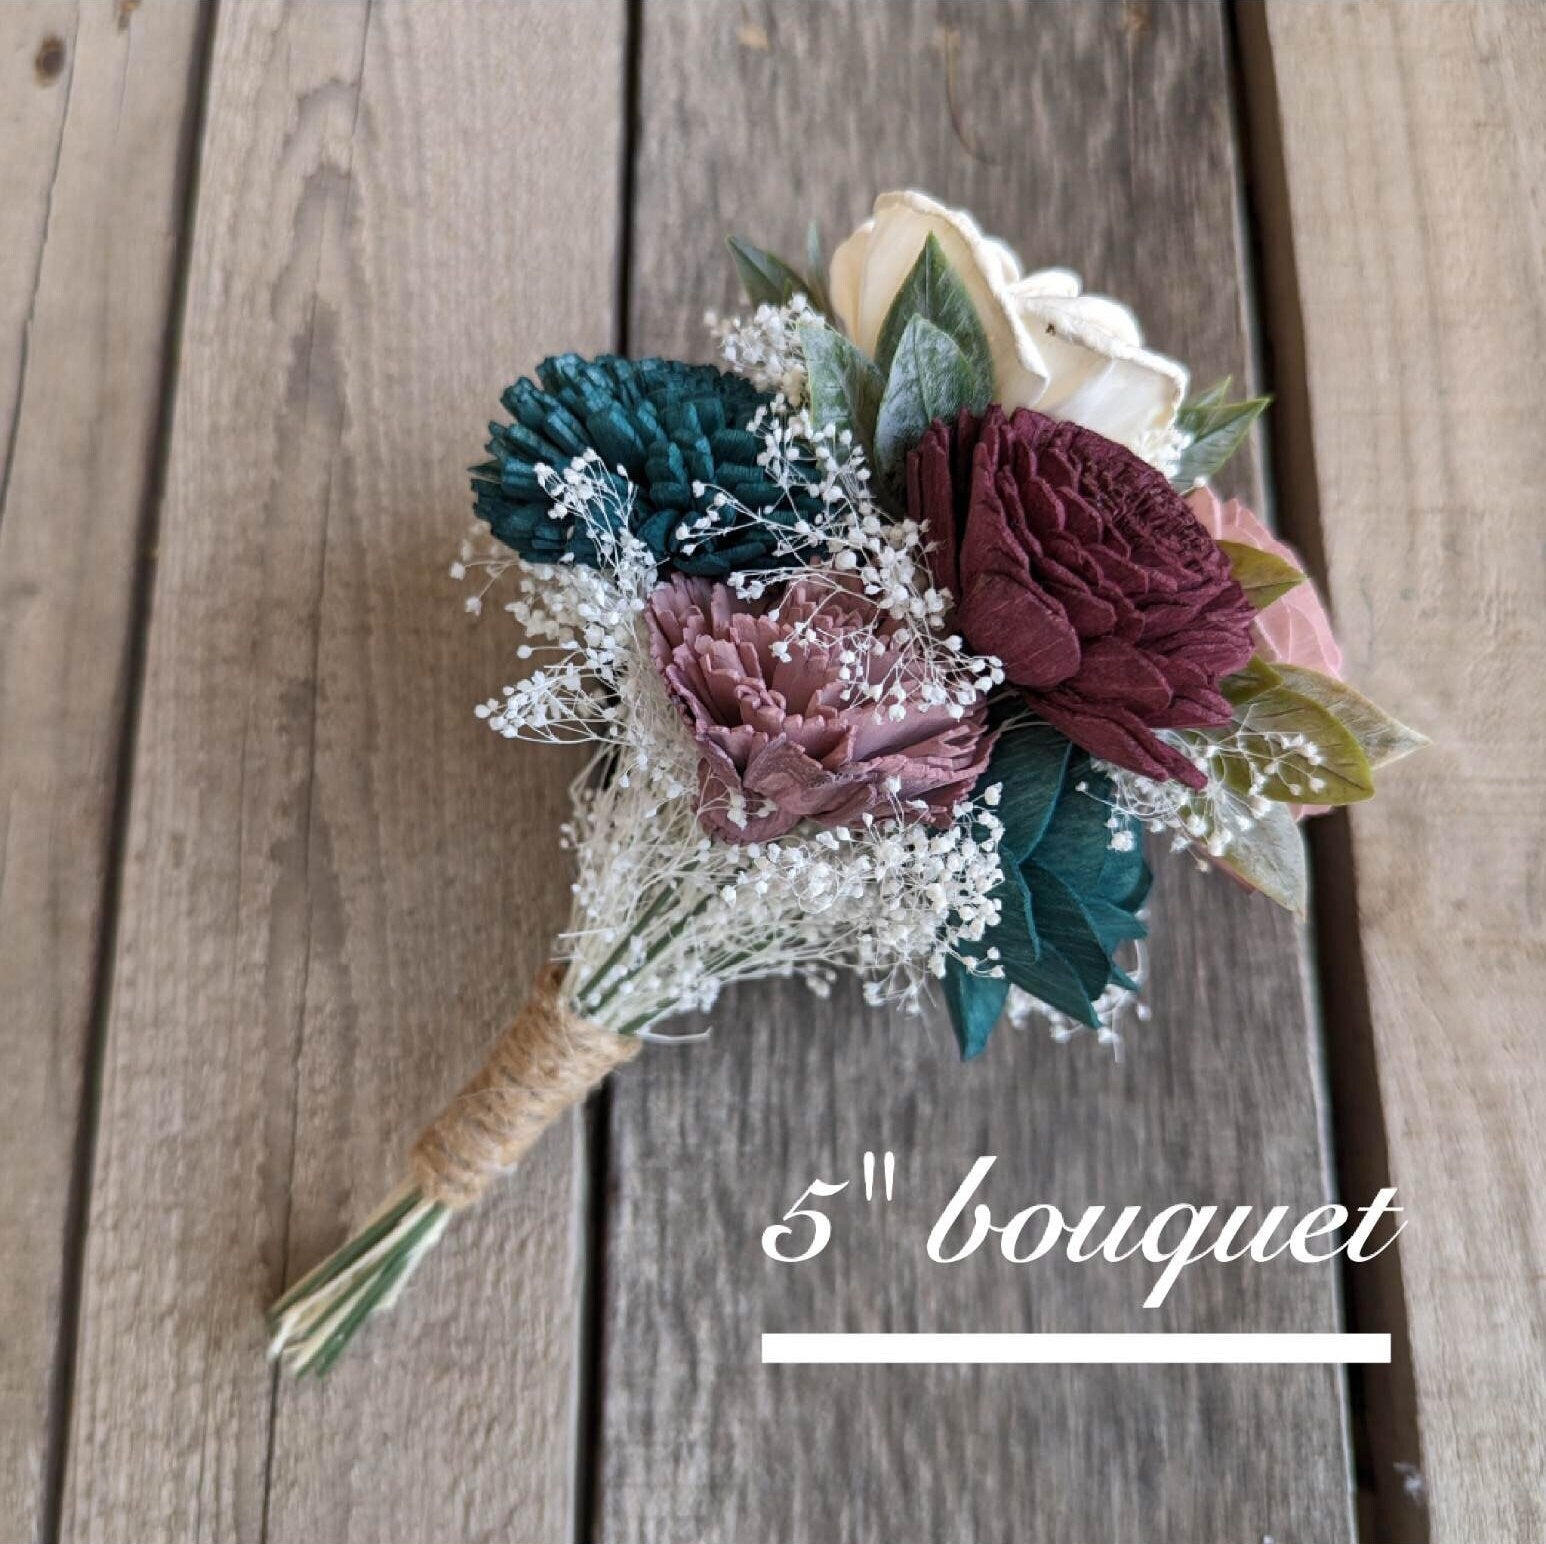 Wood Flower Mason Jar Bouquet, Wooden Flowers Centerpiece Bouquet, Pint Mason Jar Bouquet, Wedding Table Centerpiece Bouquet